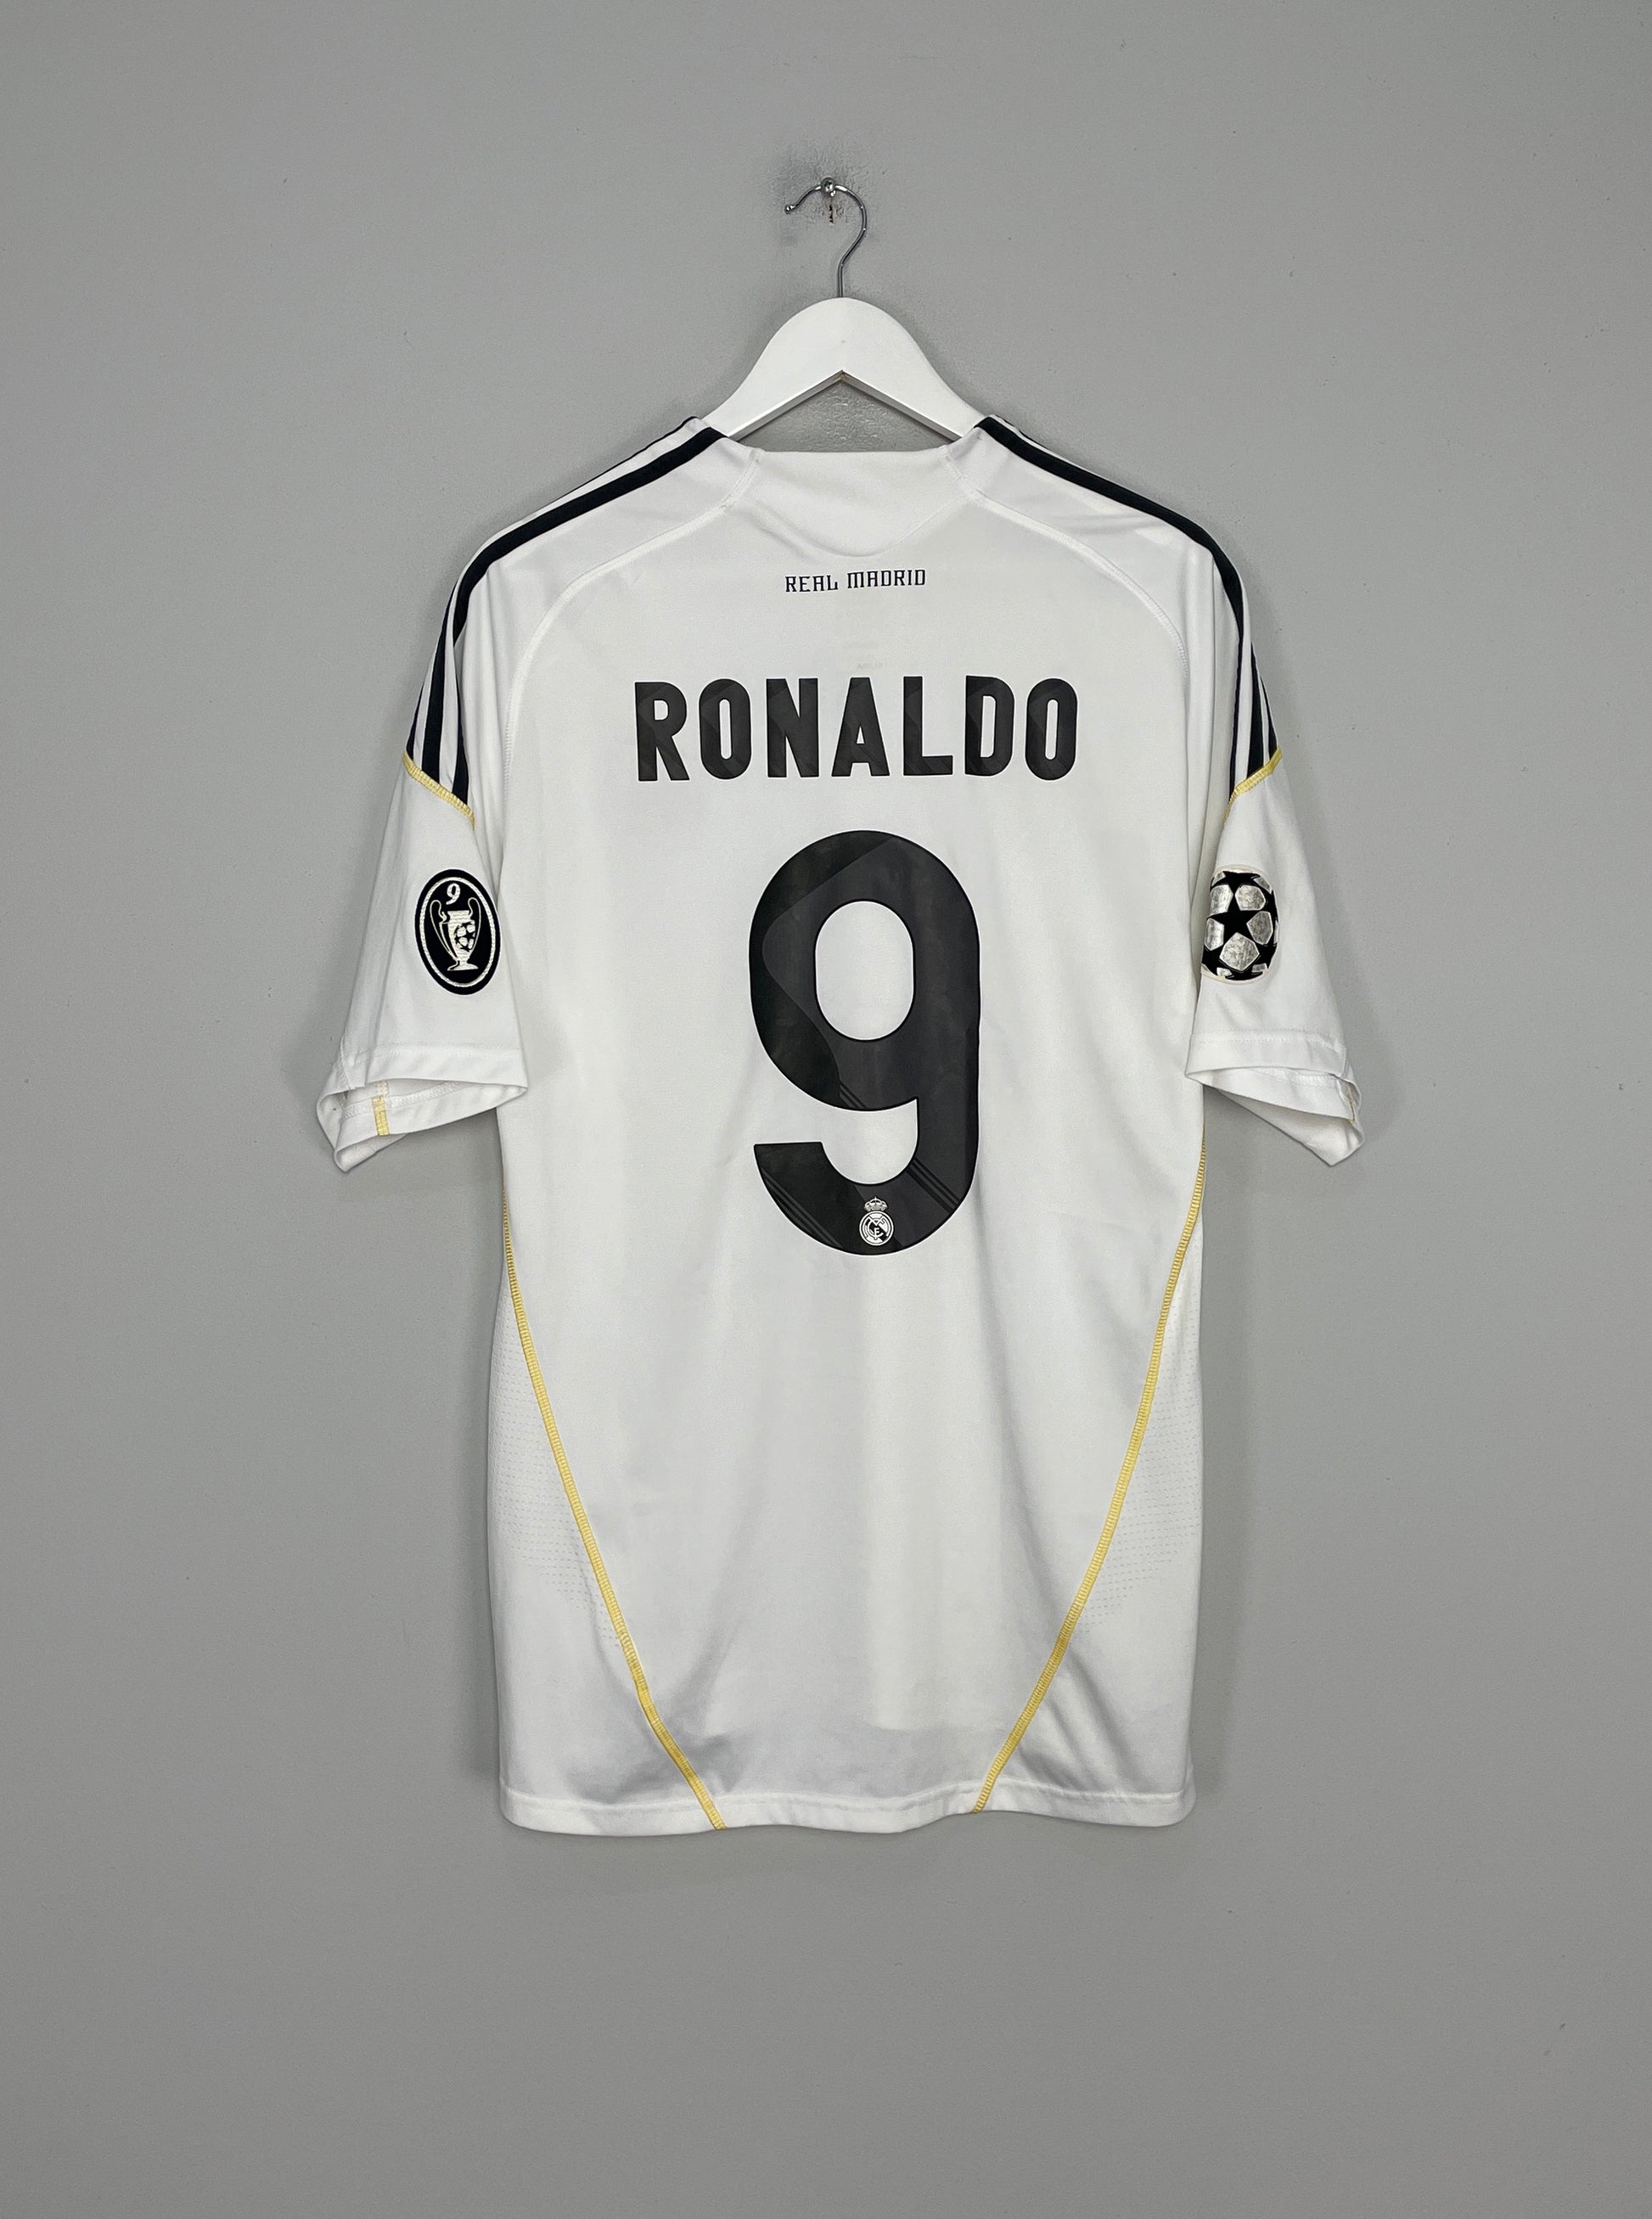 Ronaldo Madrid Jersey -  Norway